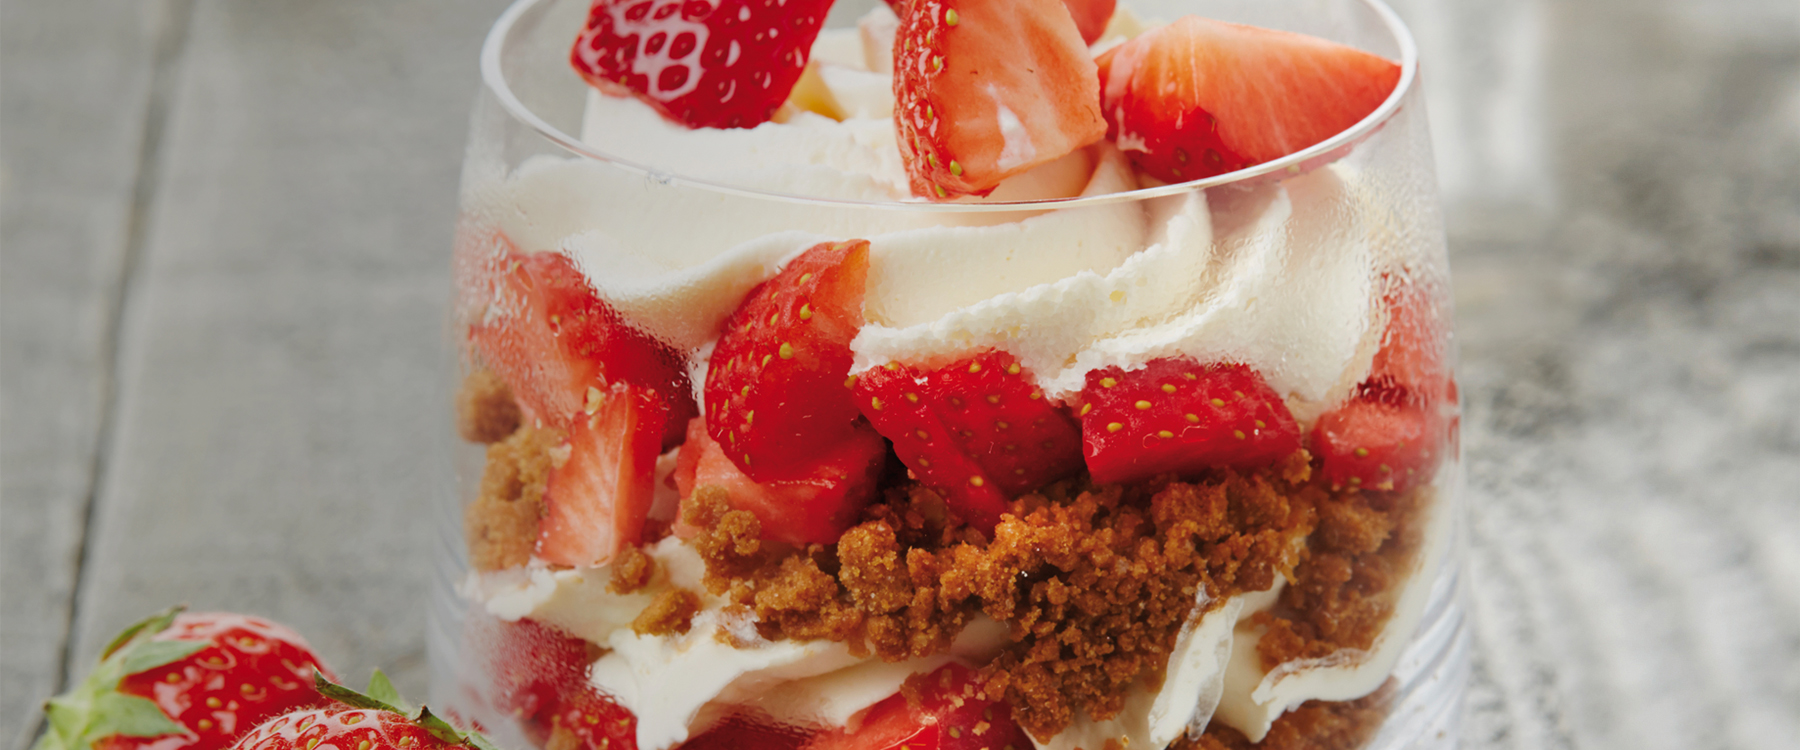 Mascarpone cream with Lotus Biscoff and strawberries | Lotus Biscoff